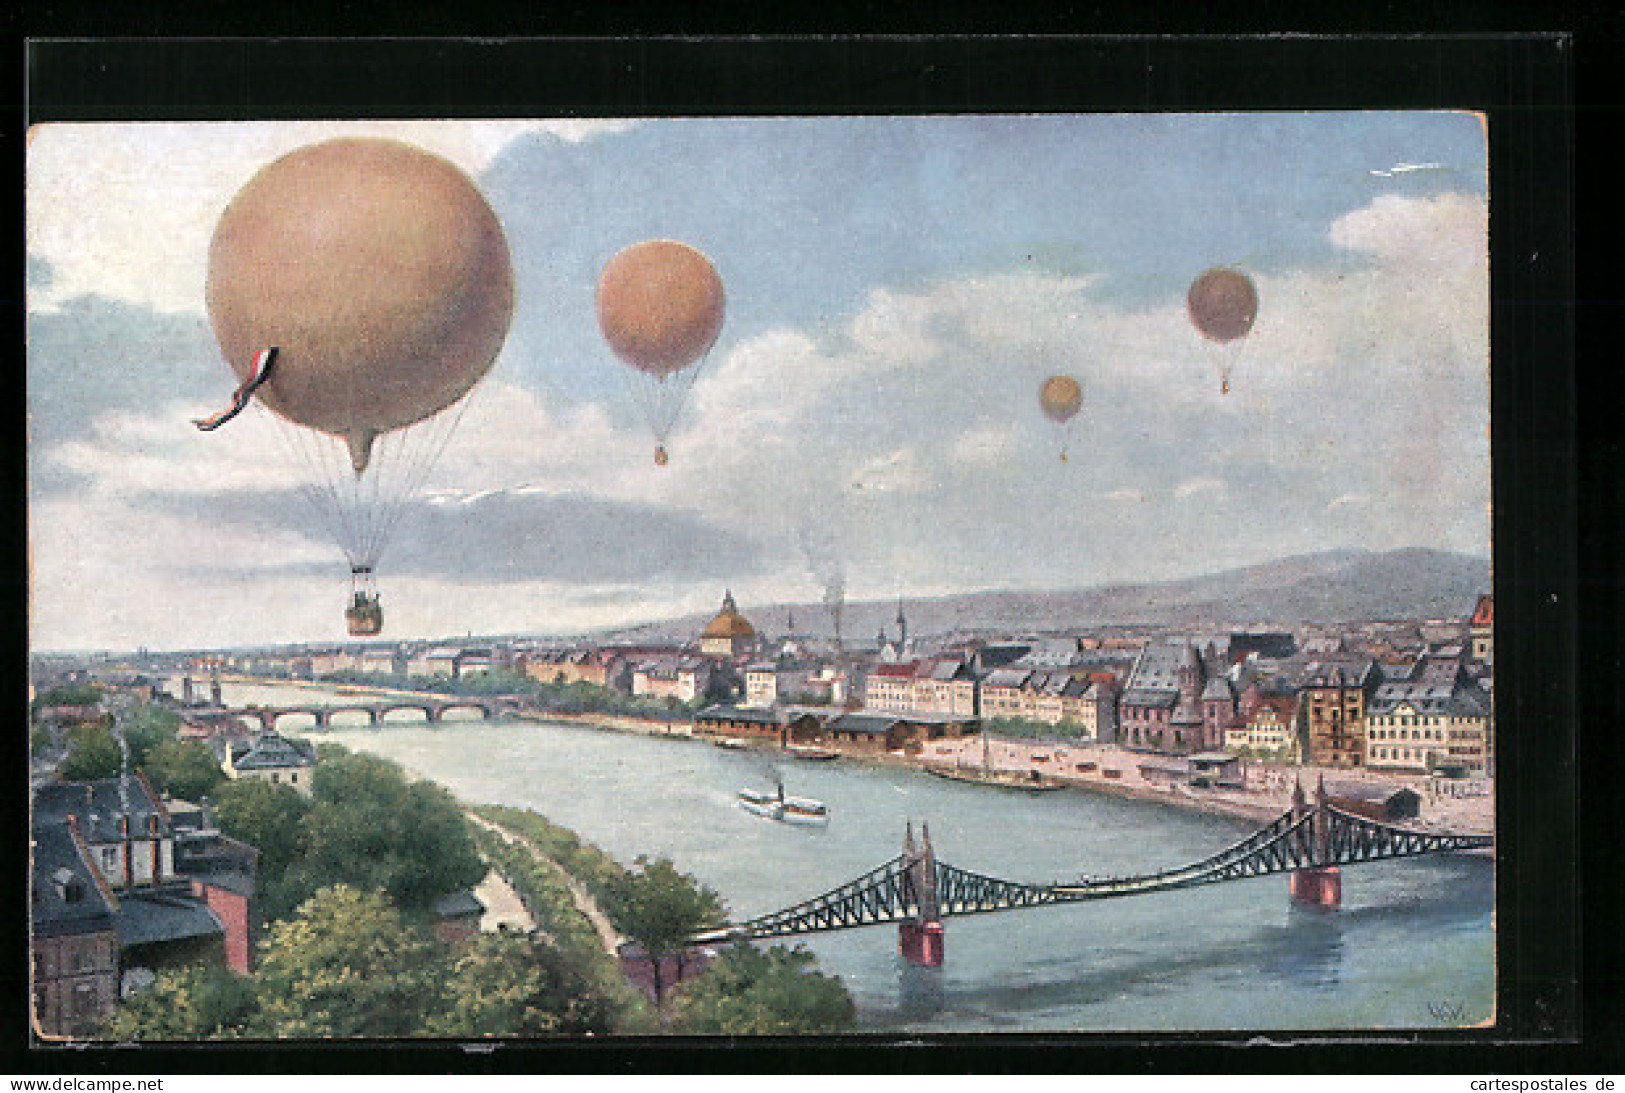 Künstler-AK Ballonfahrt über Eine Stadt  - Fesselballons